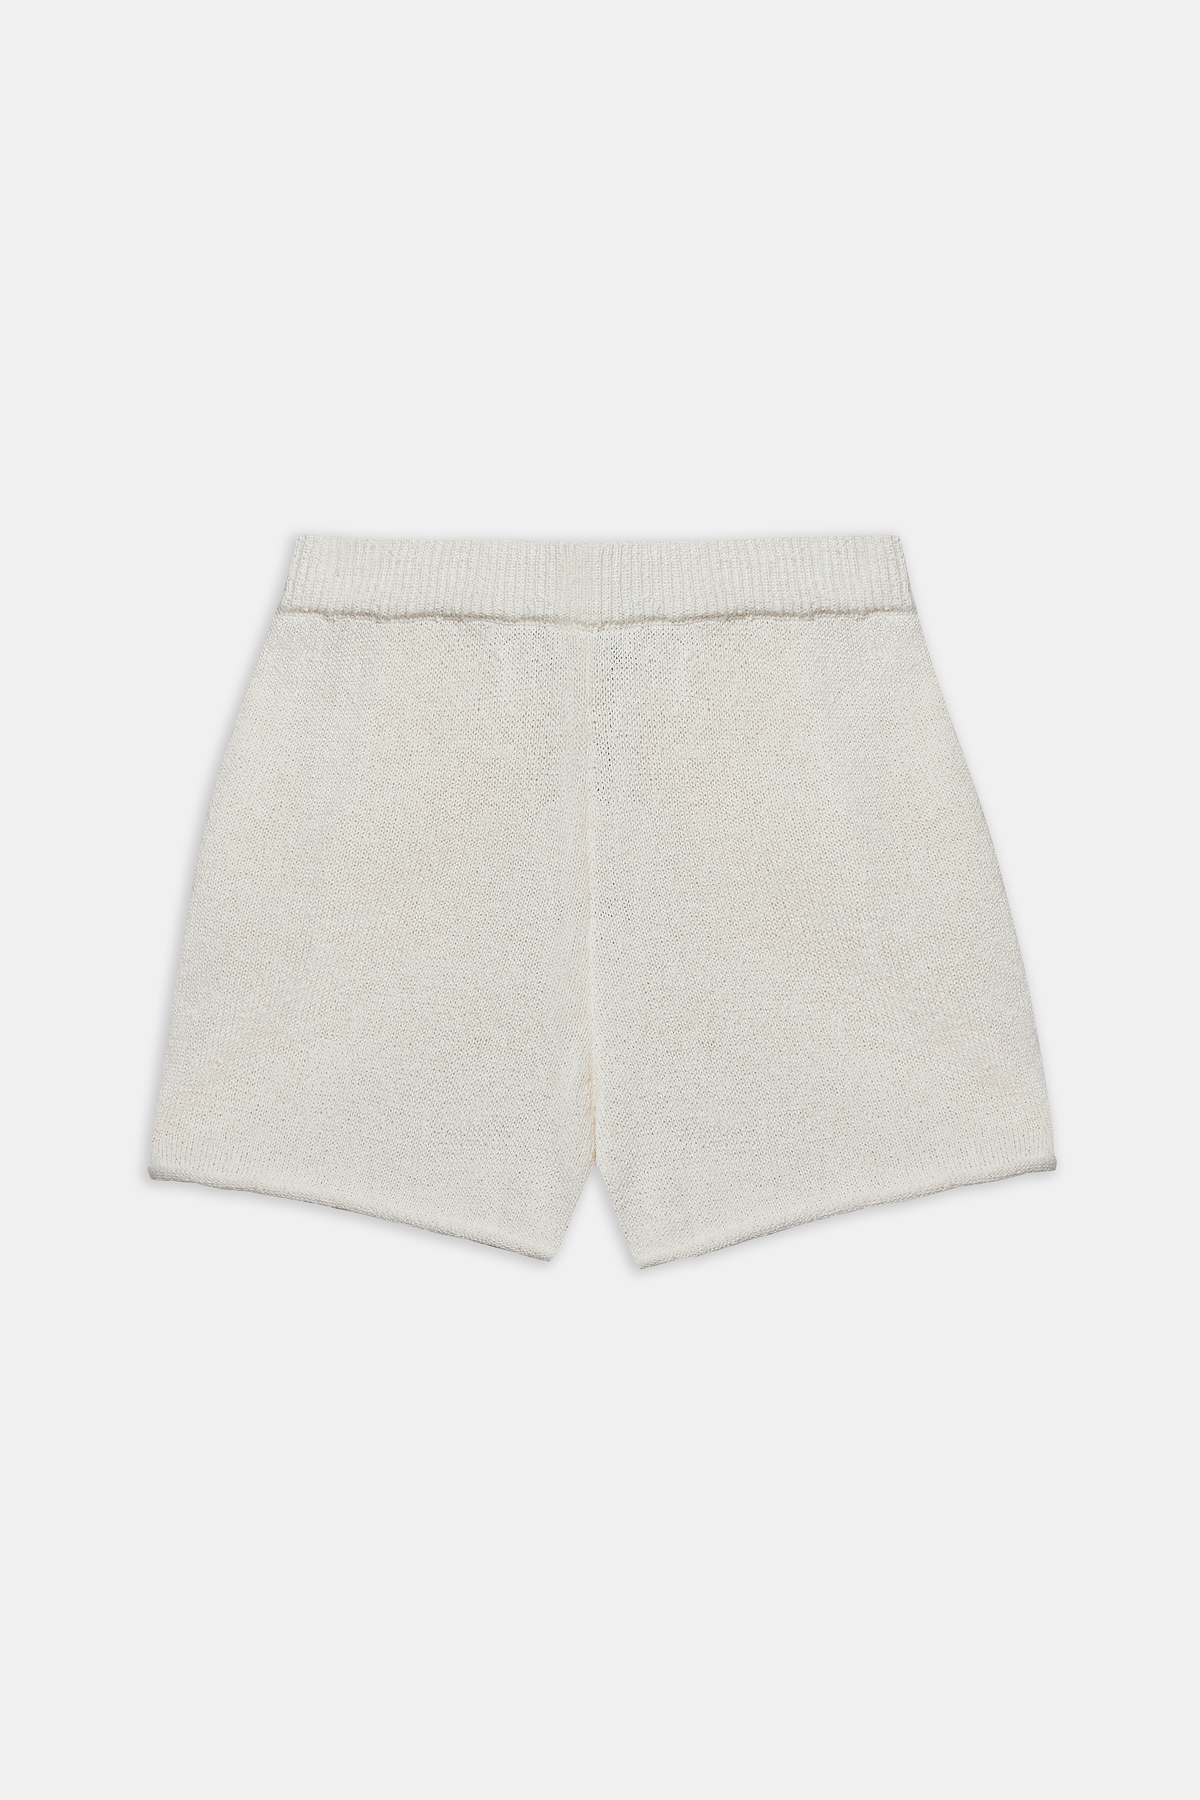 Crochet Knit Shorts - Cream